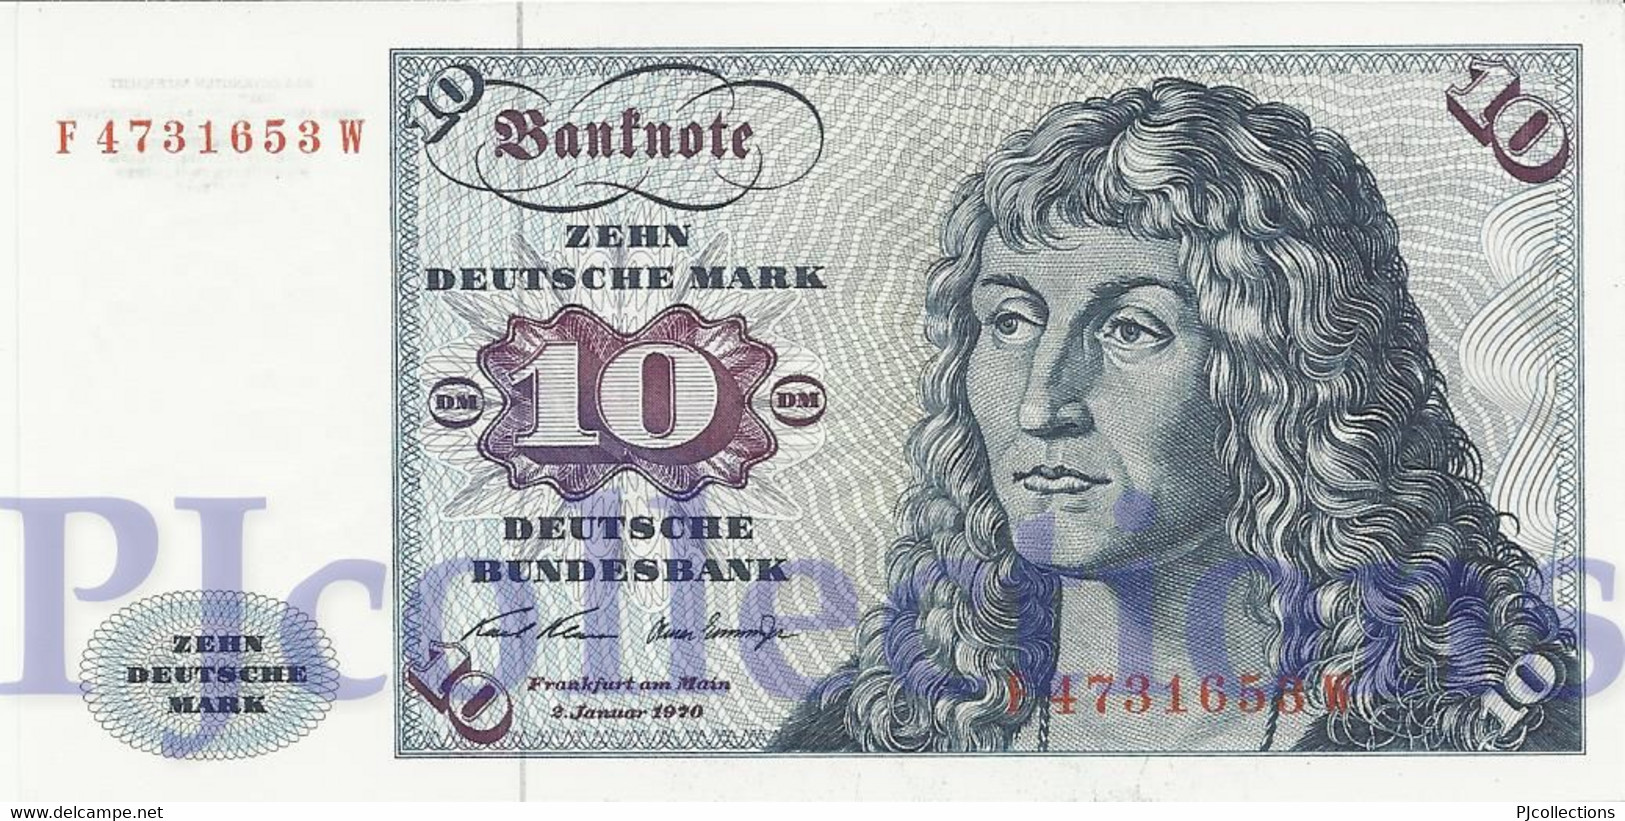 GERMANY FEDERAL REPUBLIC 10 DEUTSHE MARK 1970 PICK 31a UNC - 10 Deutsche Mark